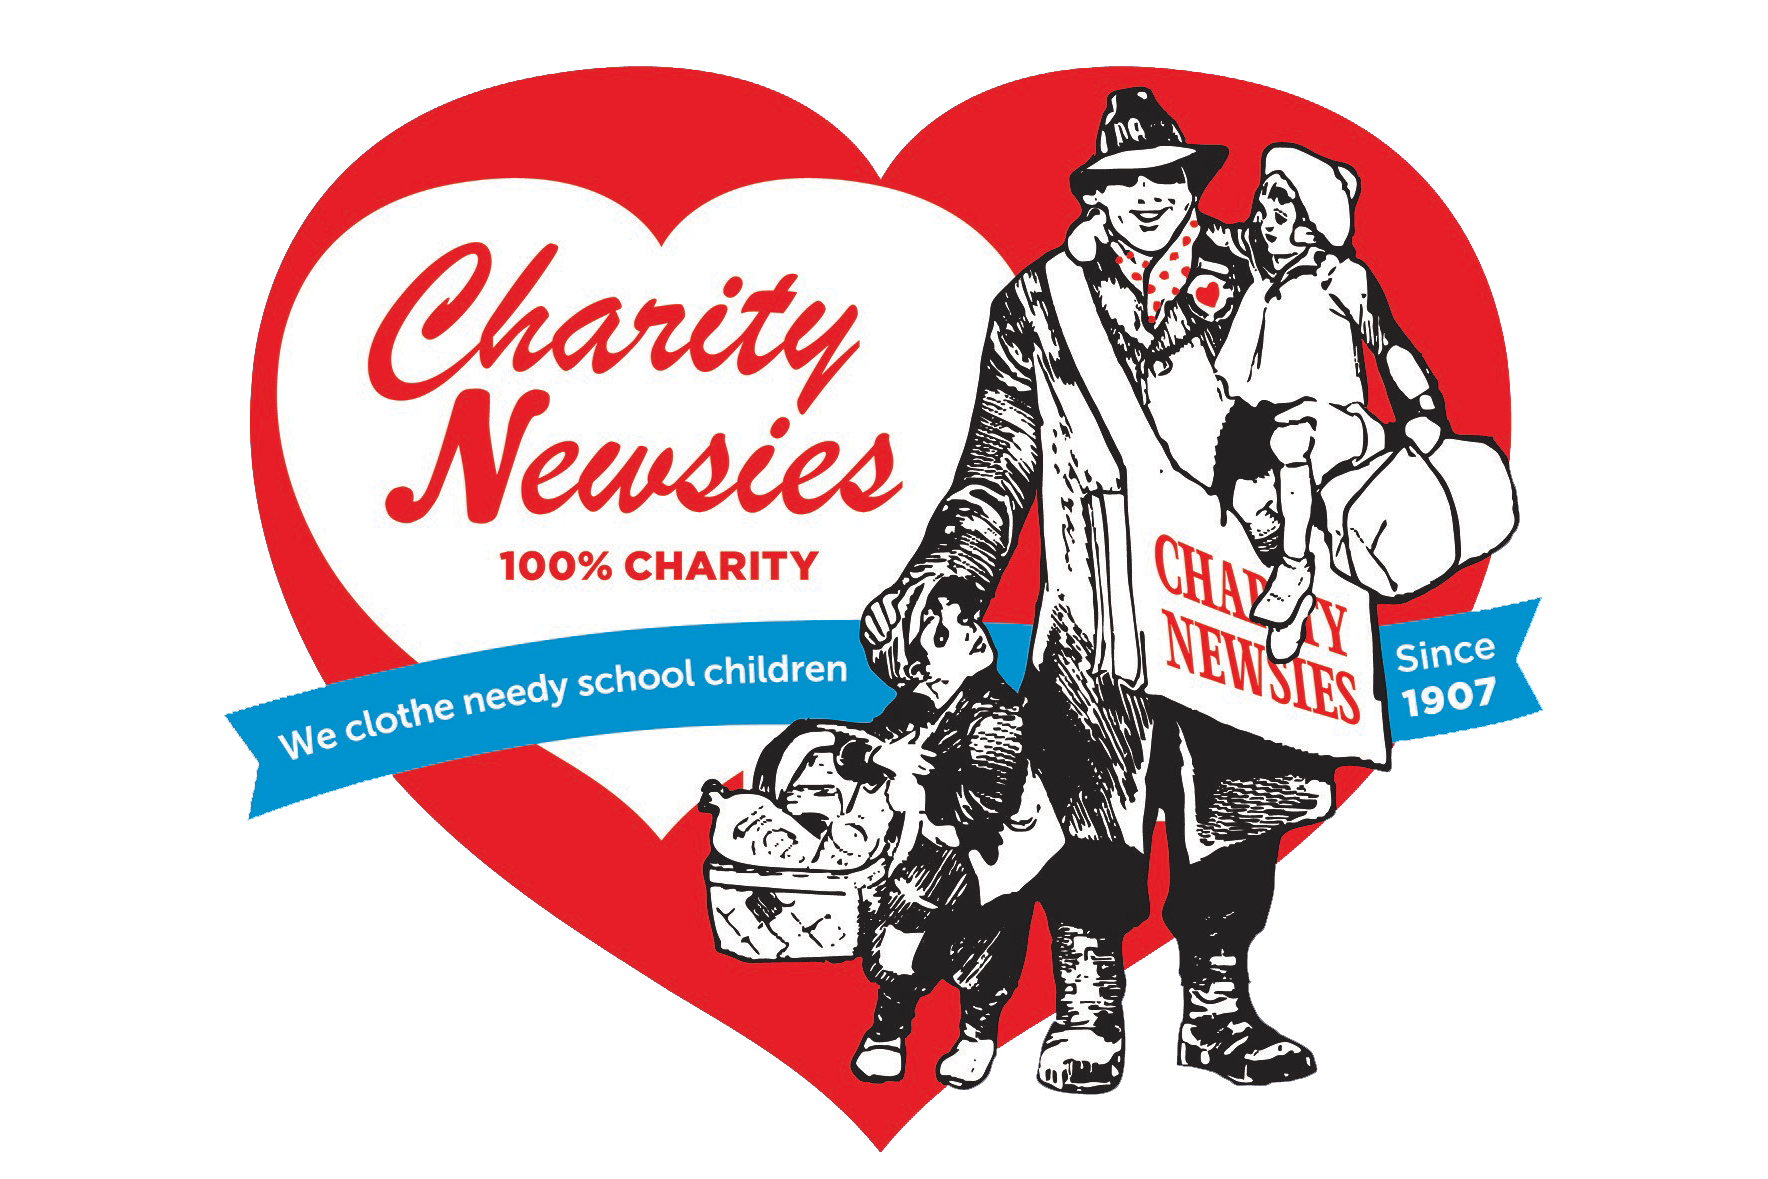 Charity-Newsies-logo.png